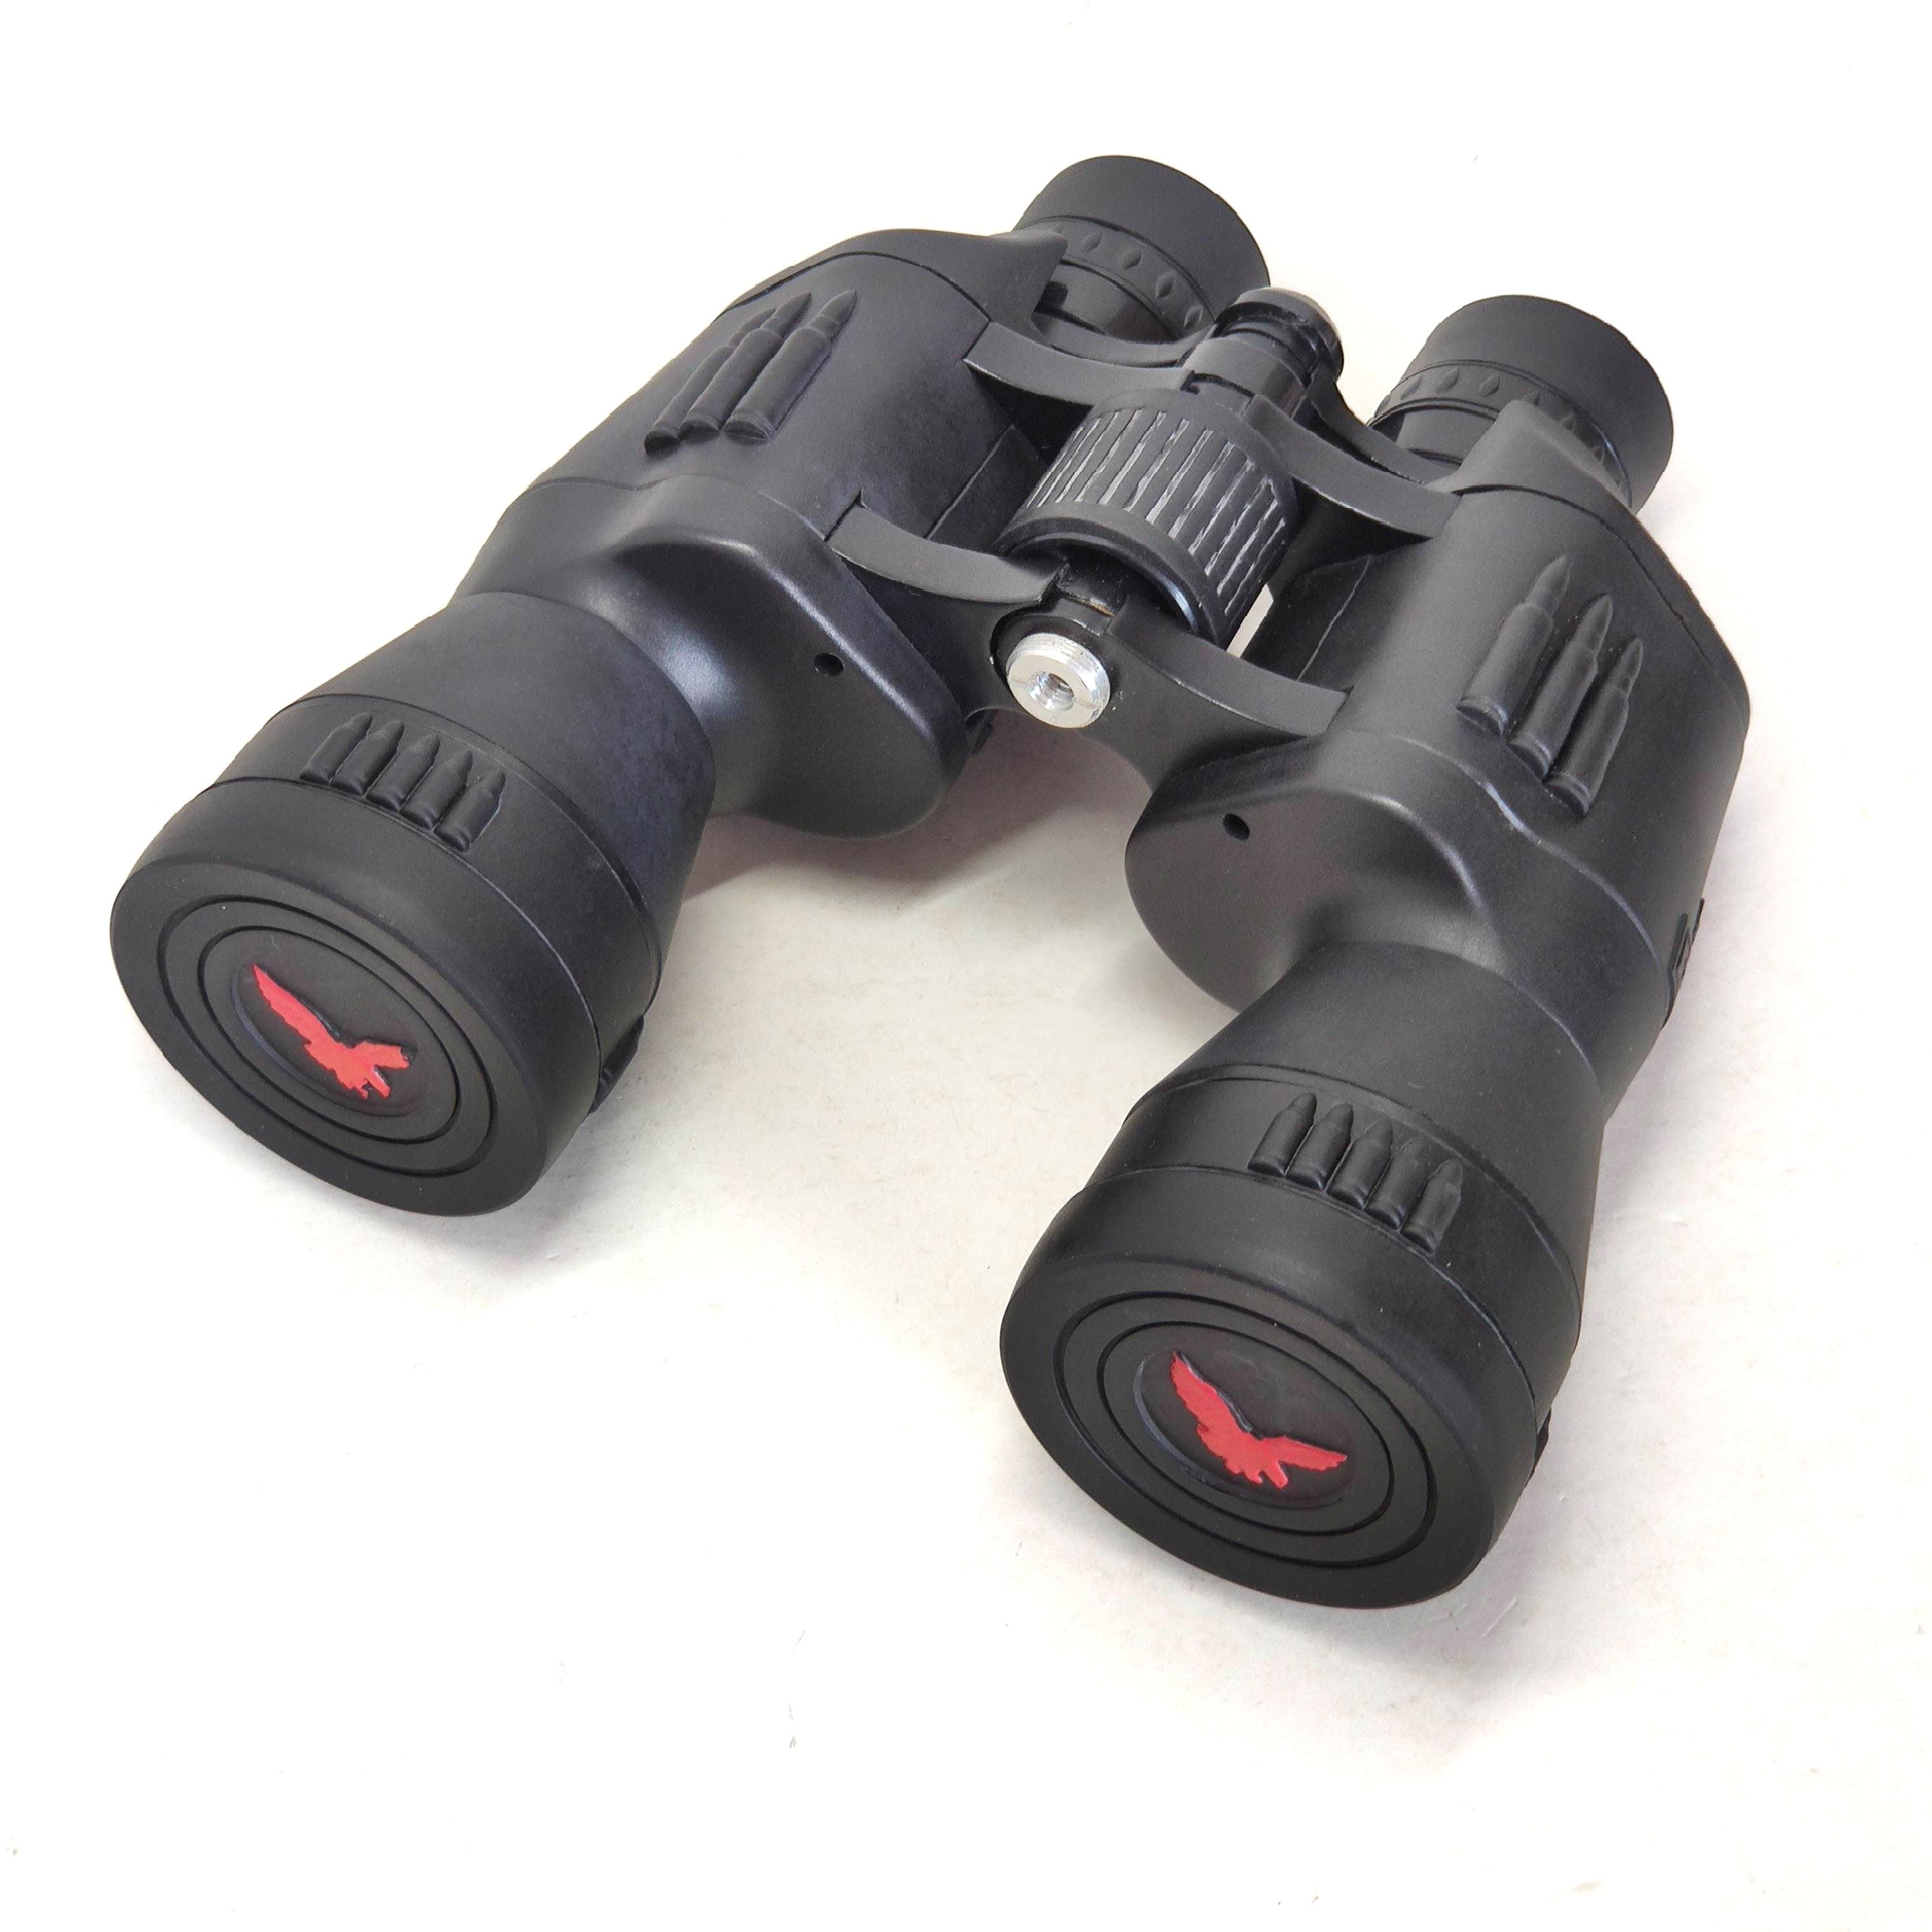 Binoculars Russian style CCCP Sehfeld 99990 x 6880 8m 480000m